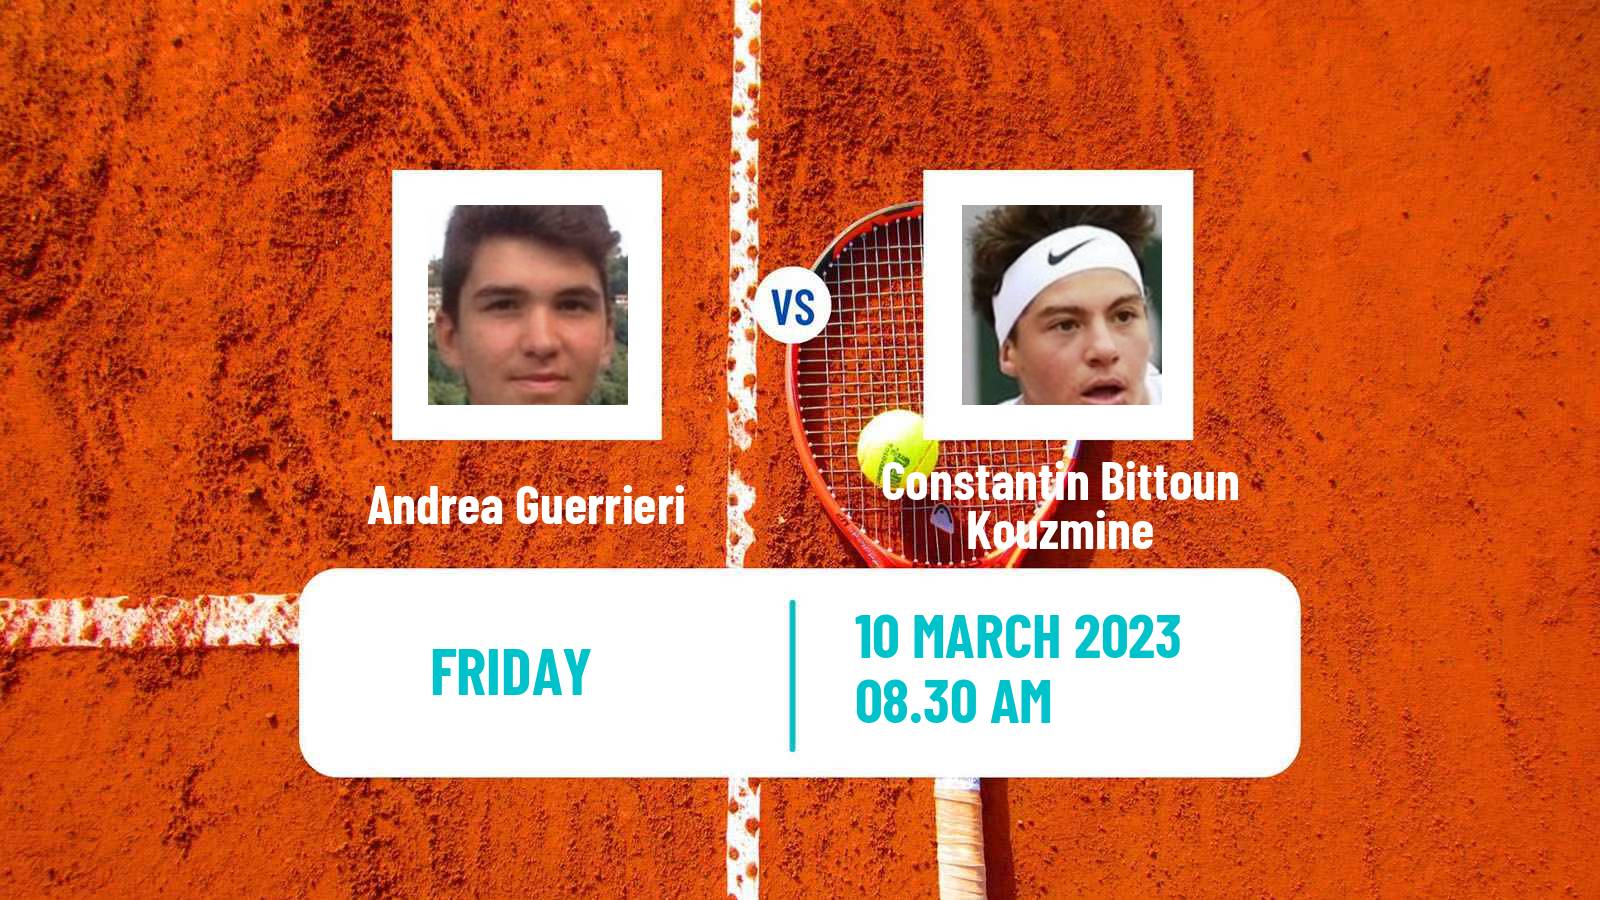 Tennis ITF Tournaments Andrea Guerrieri - Constantin Bittoun Kouzmine